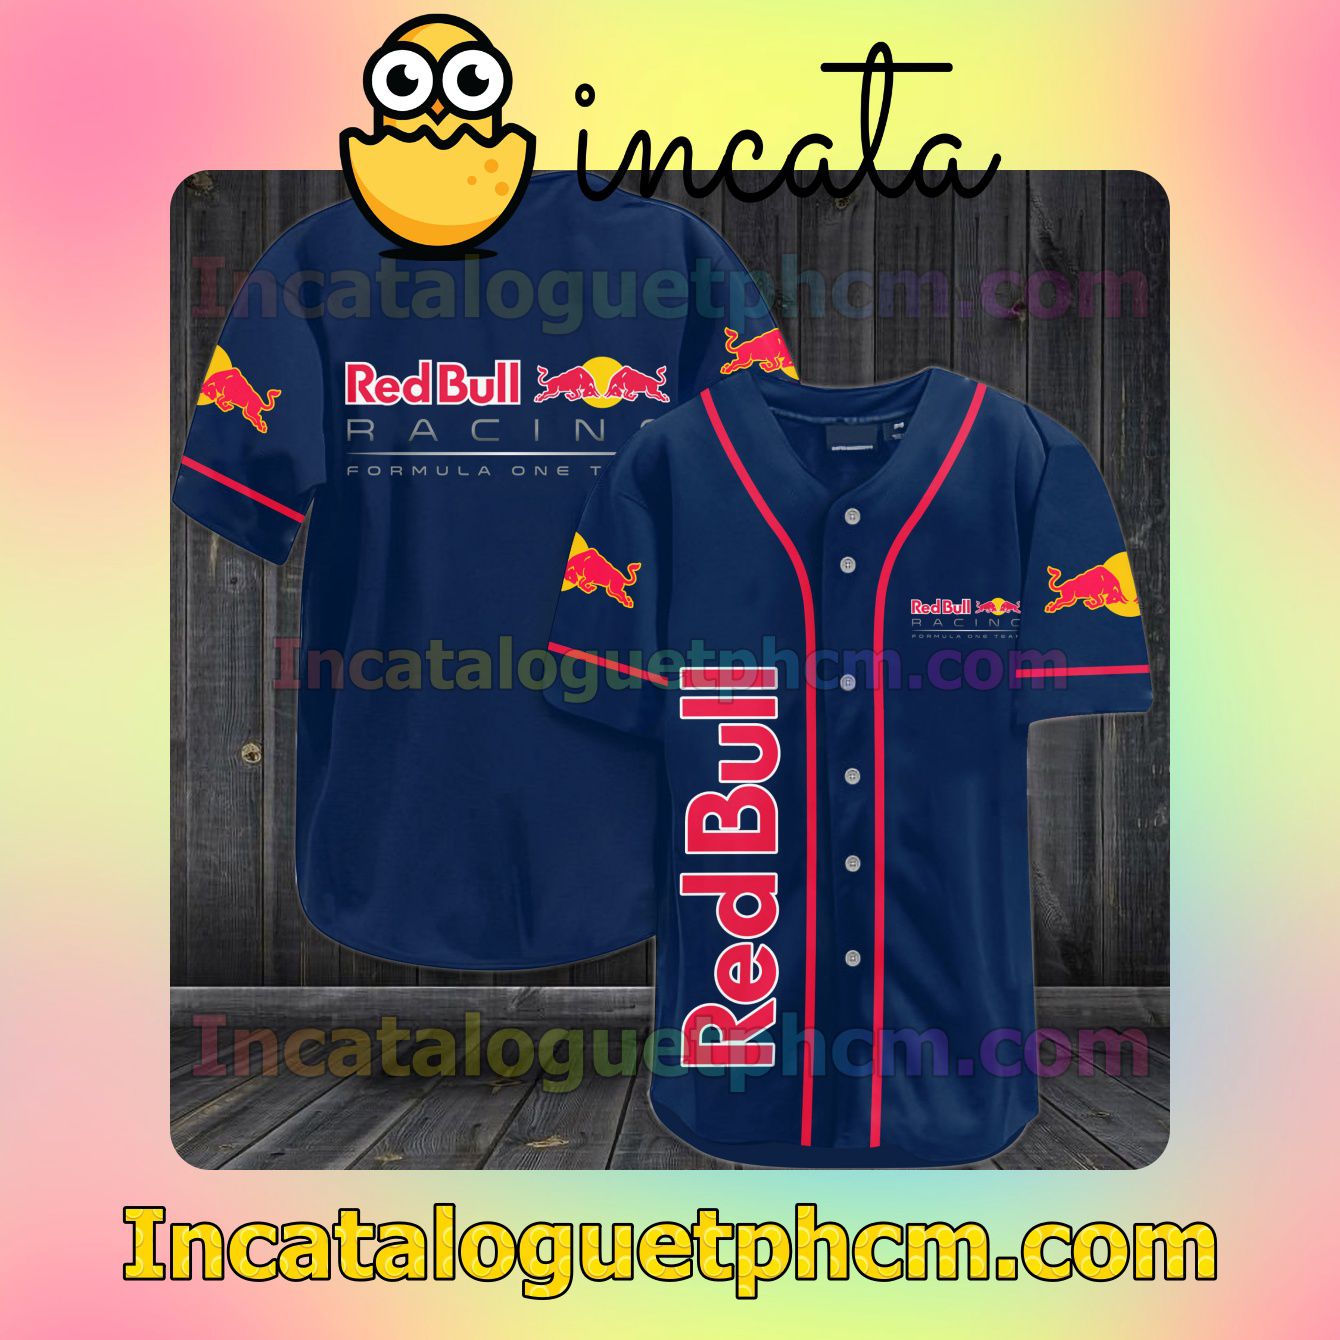 Red Bull Racing Baseball Jersey Shirt